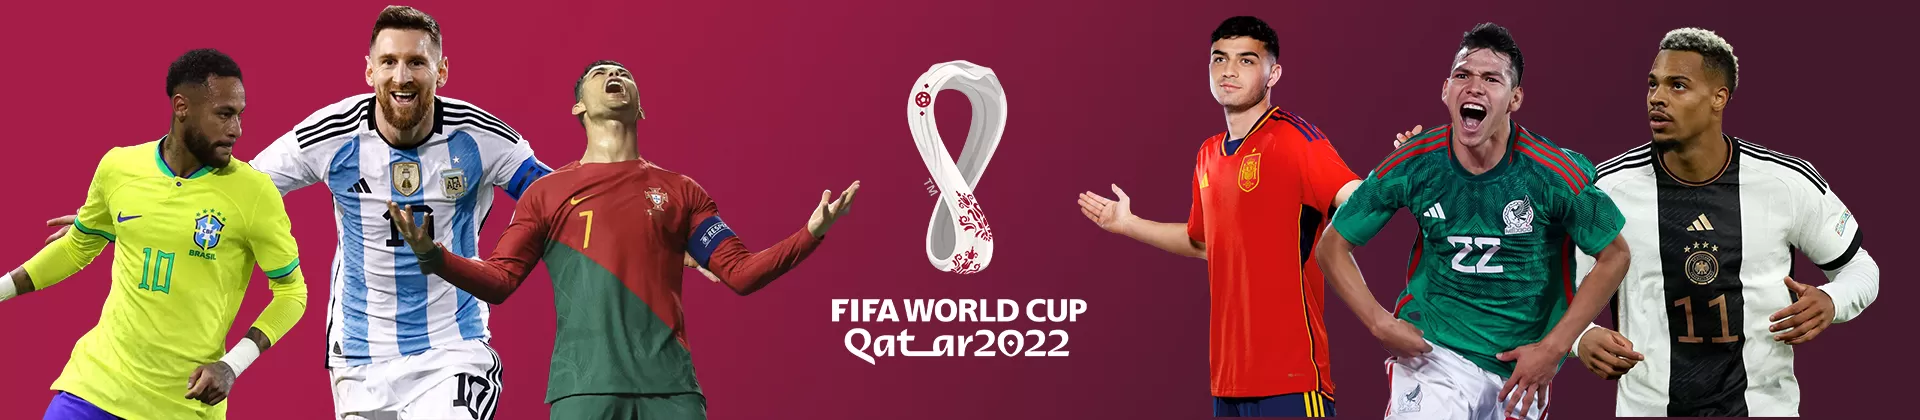 World Cup 2022 Banner - jerseymallpro